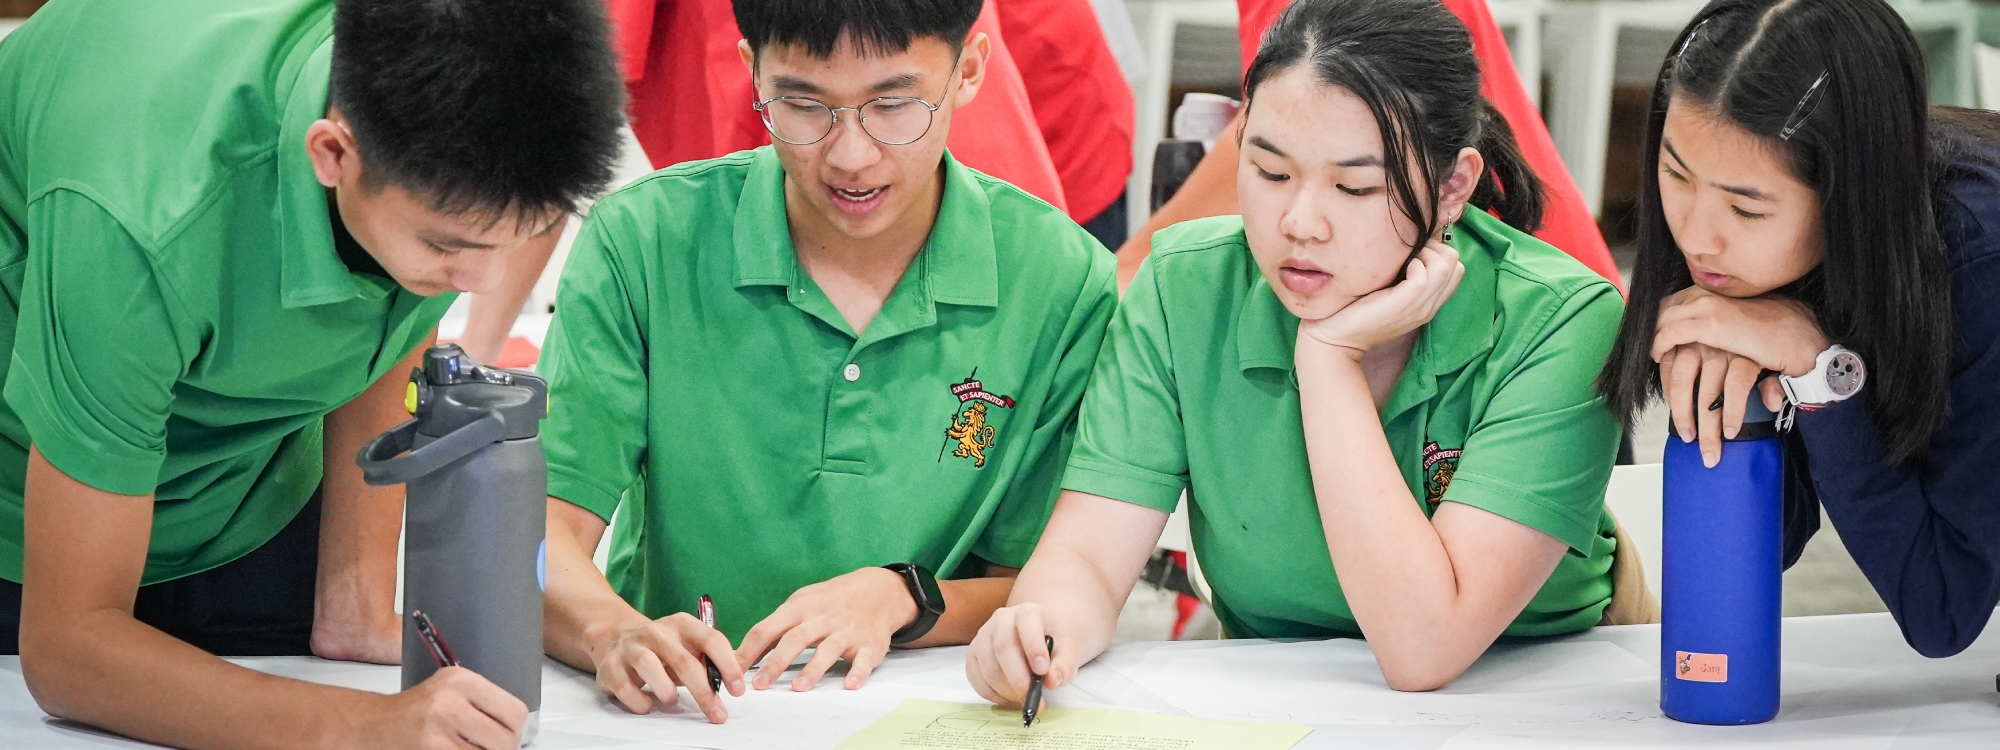 The Mathematics Journey: Inter-house Maths Challenge at King's Bangkok